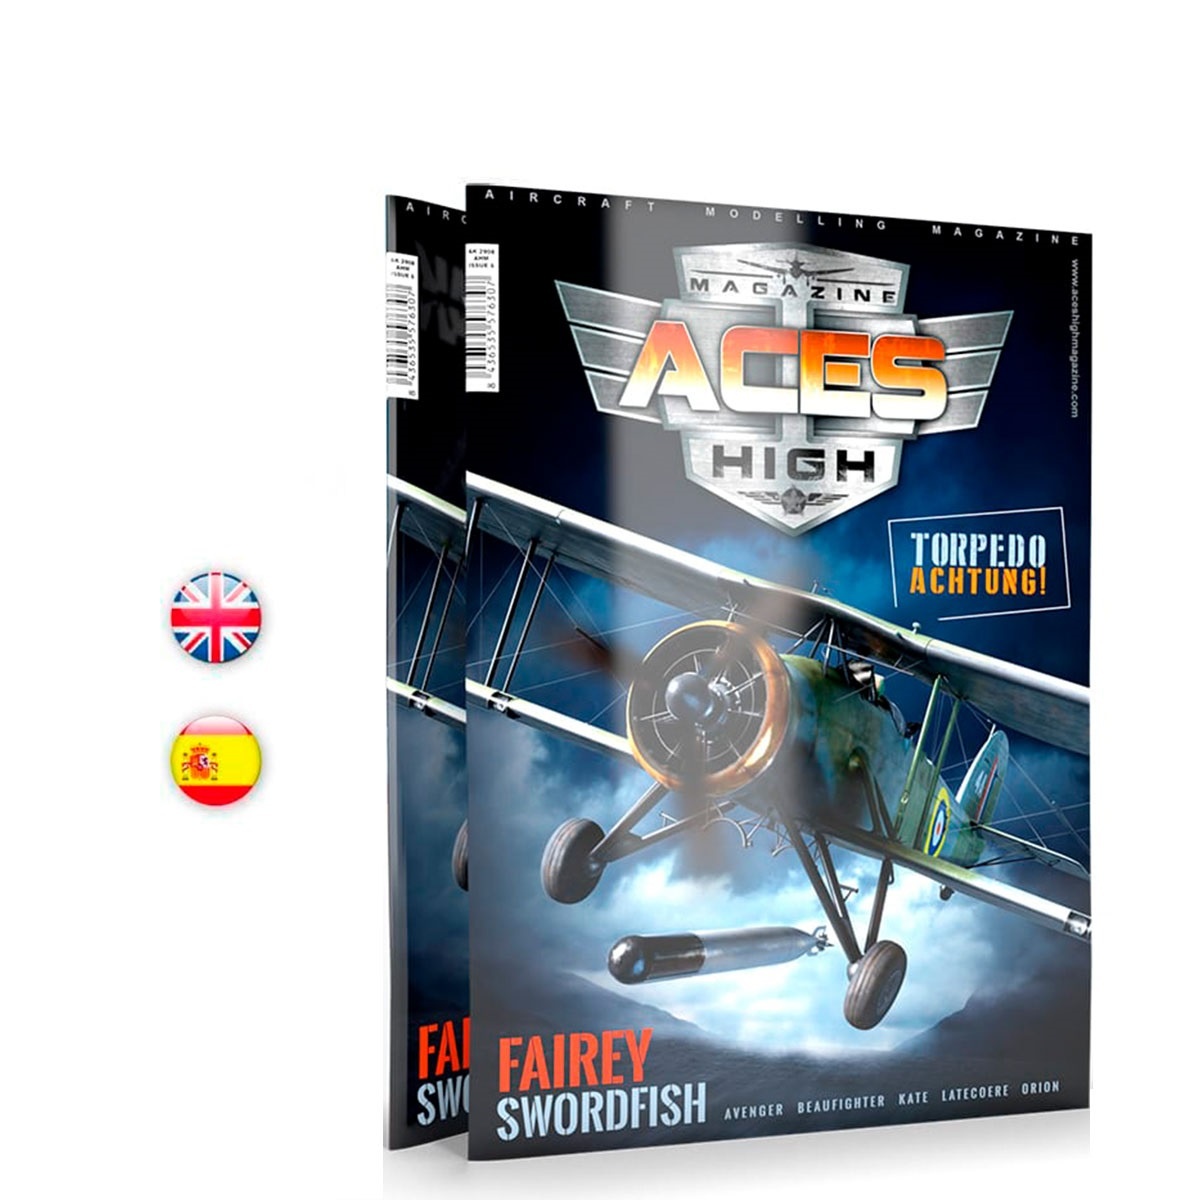 Aces High Aces High 17 Torpedo Achtung !! - English - AK-Interactive - AK-2935